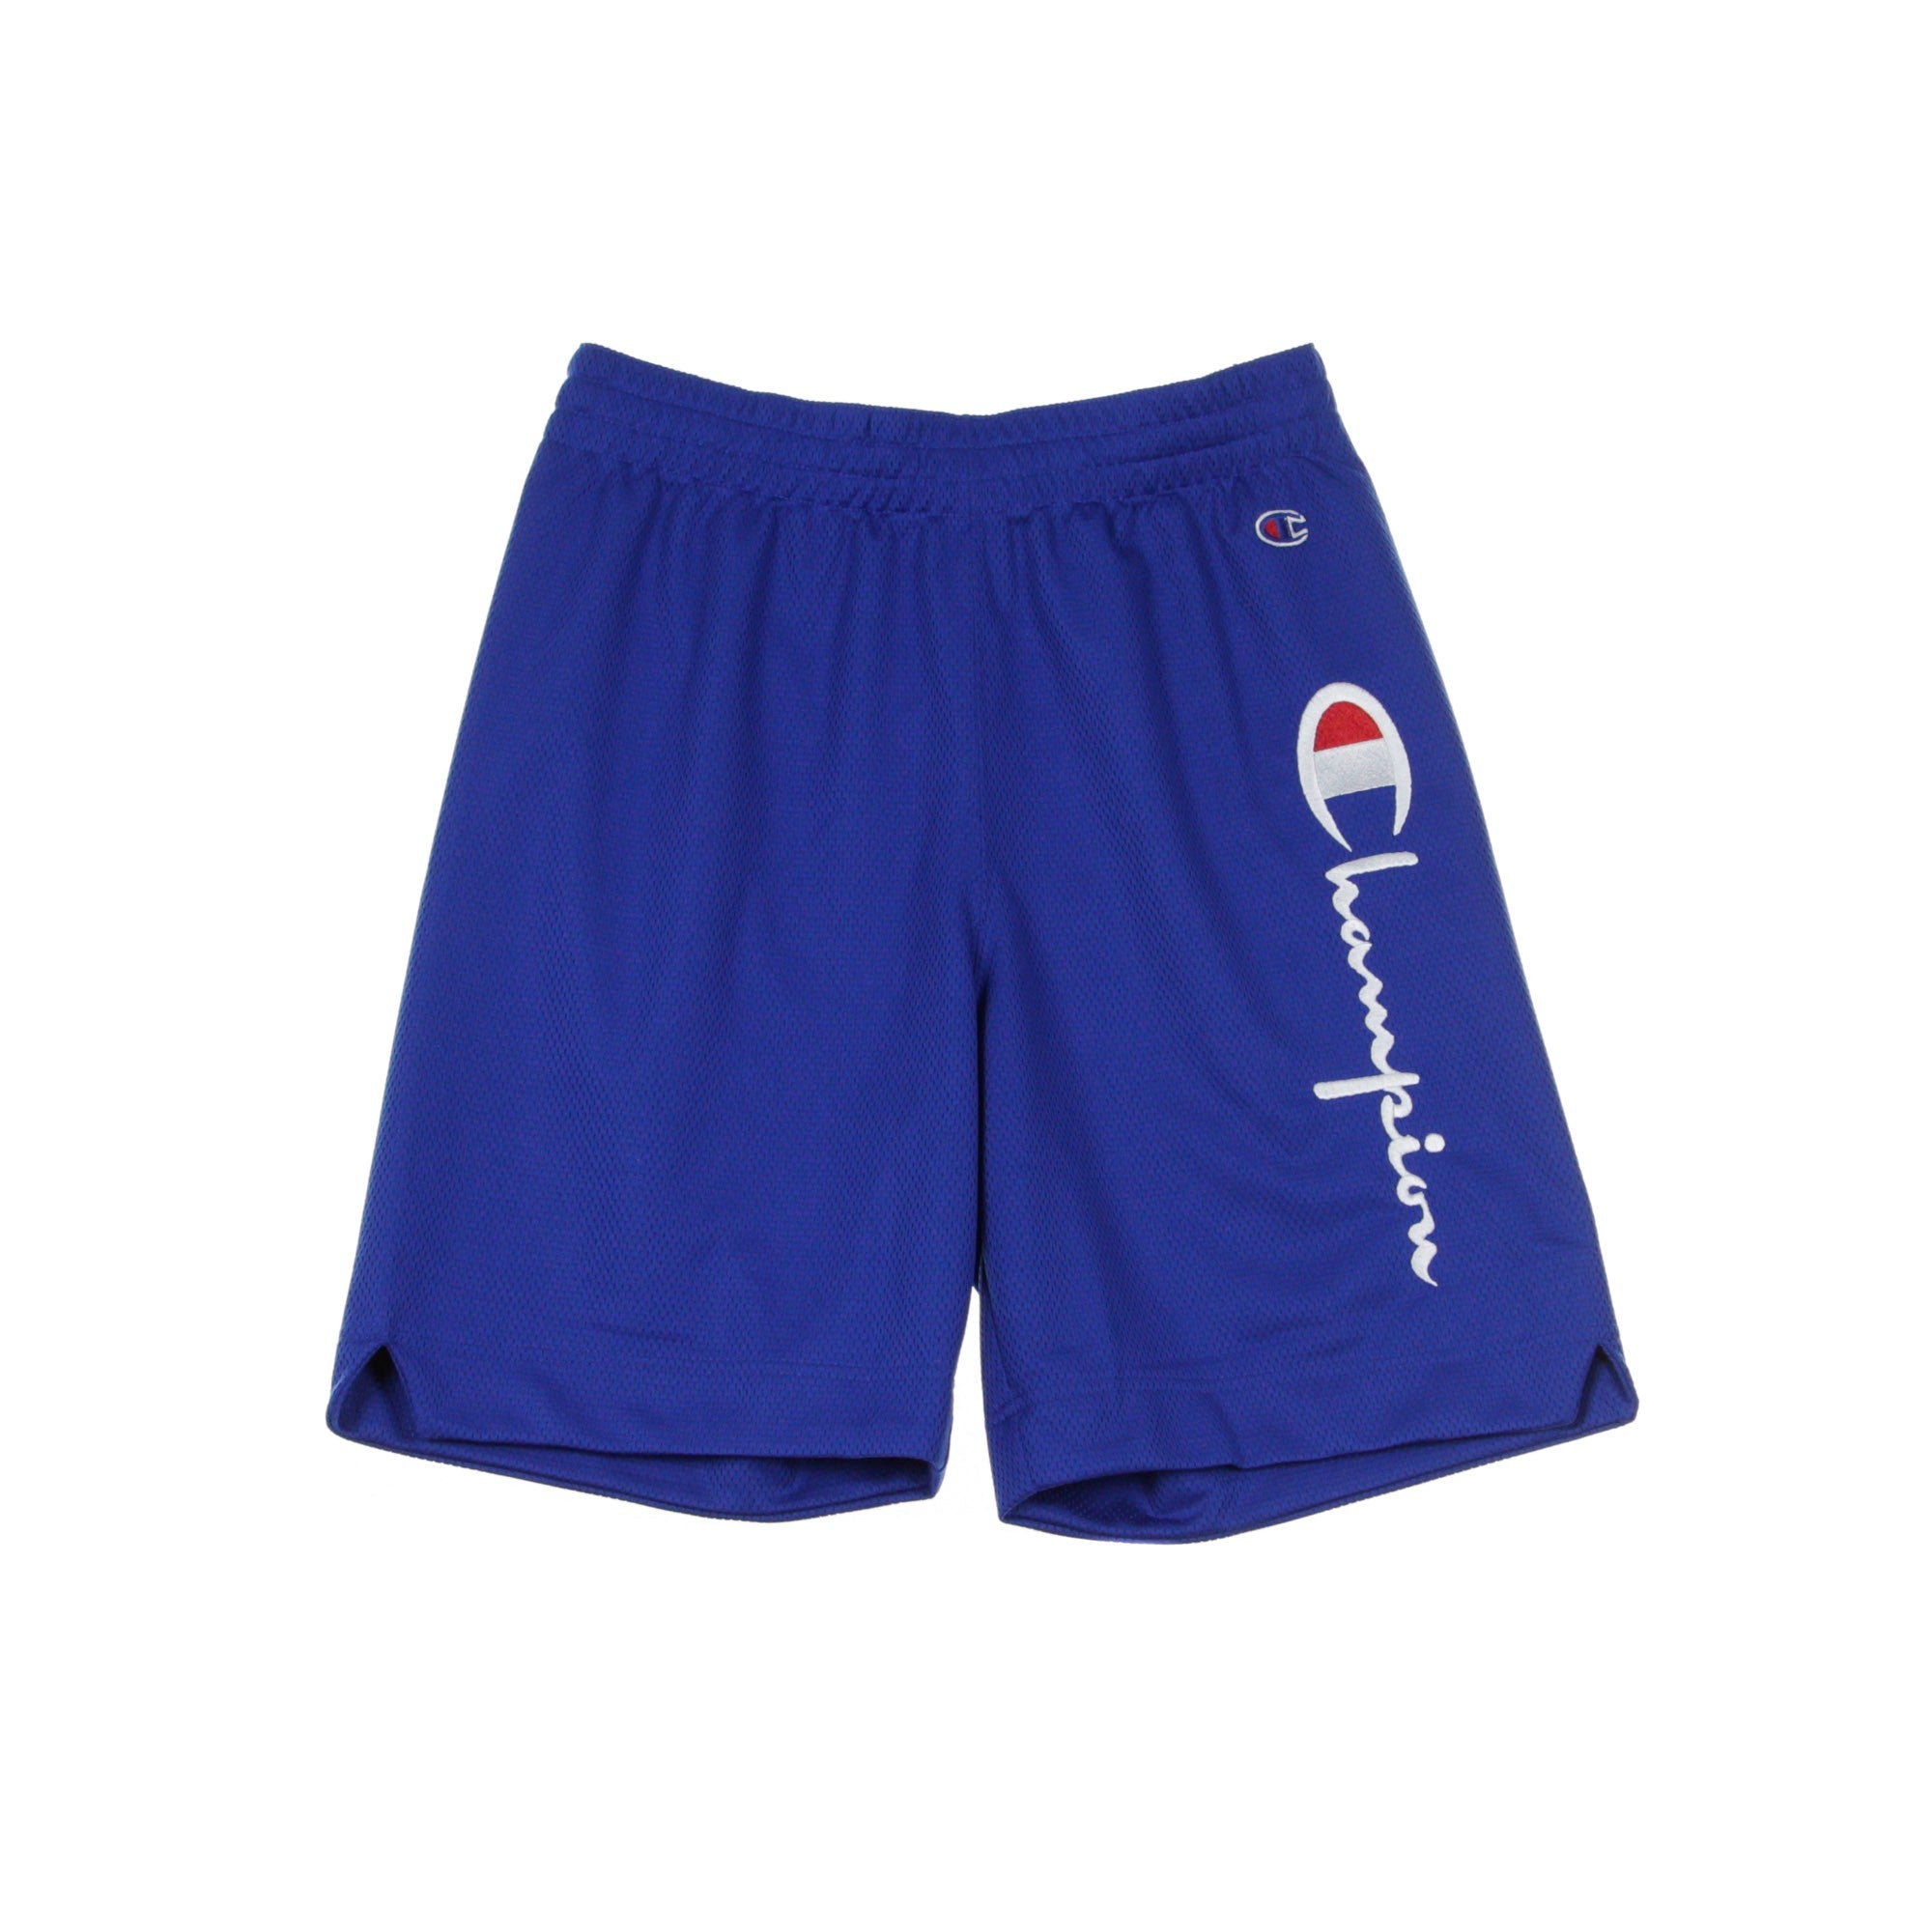 Men's Basketball Shorts Shorts Blue